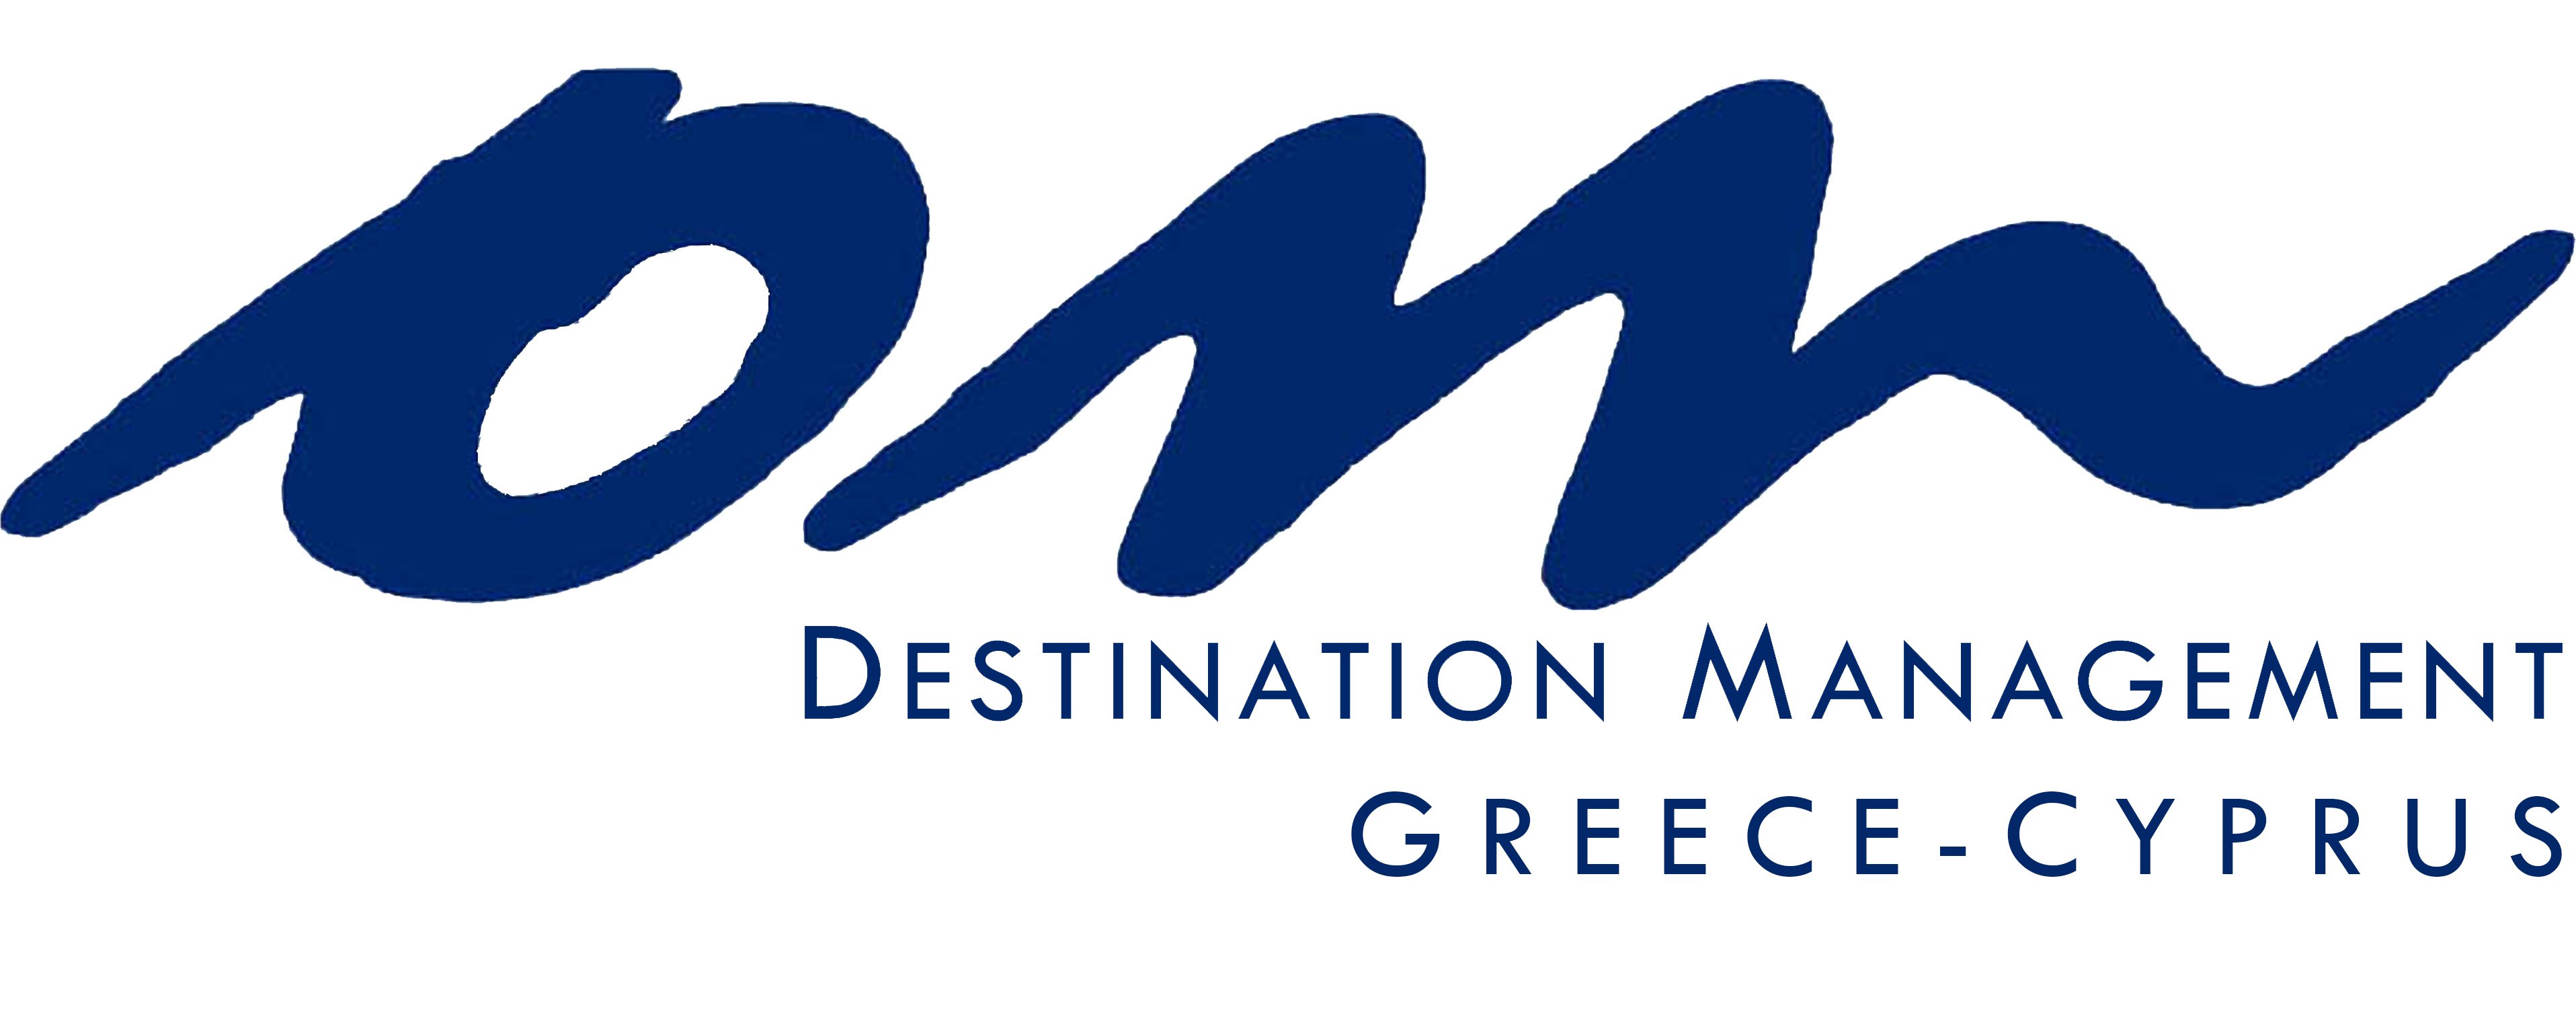 OM DMC Cyprus - Greece